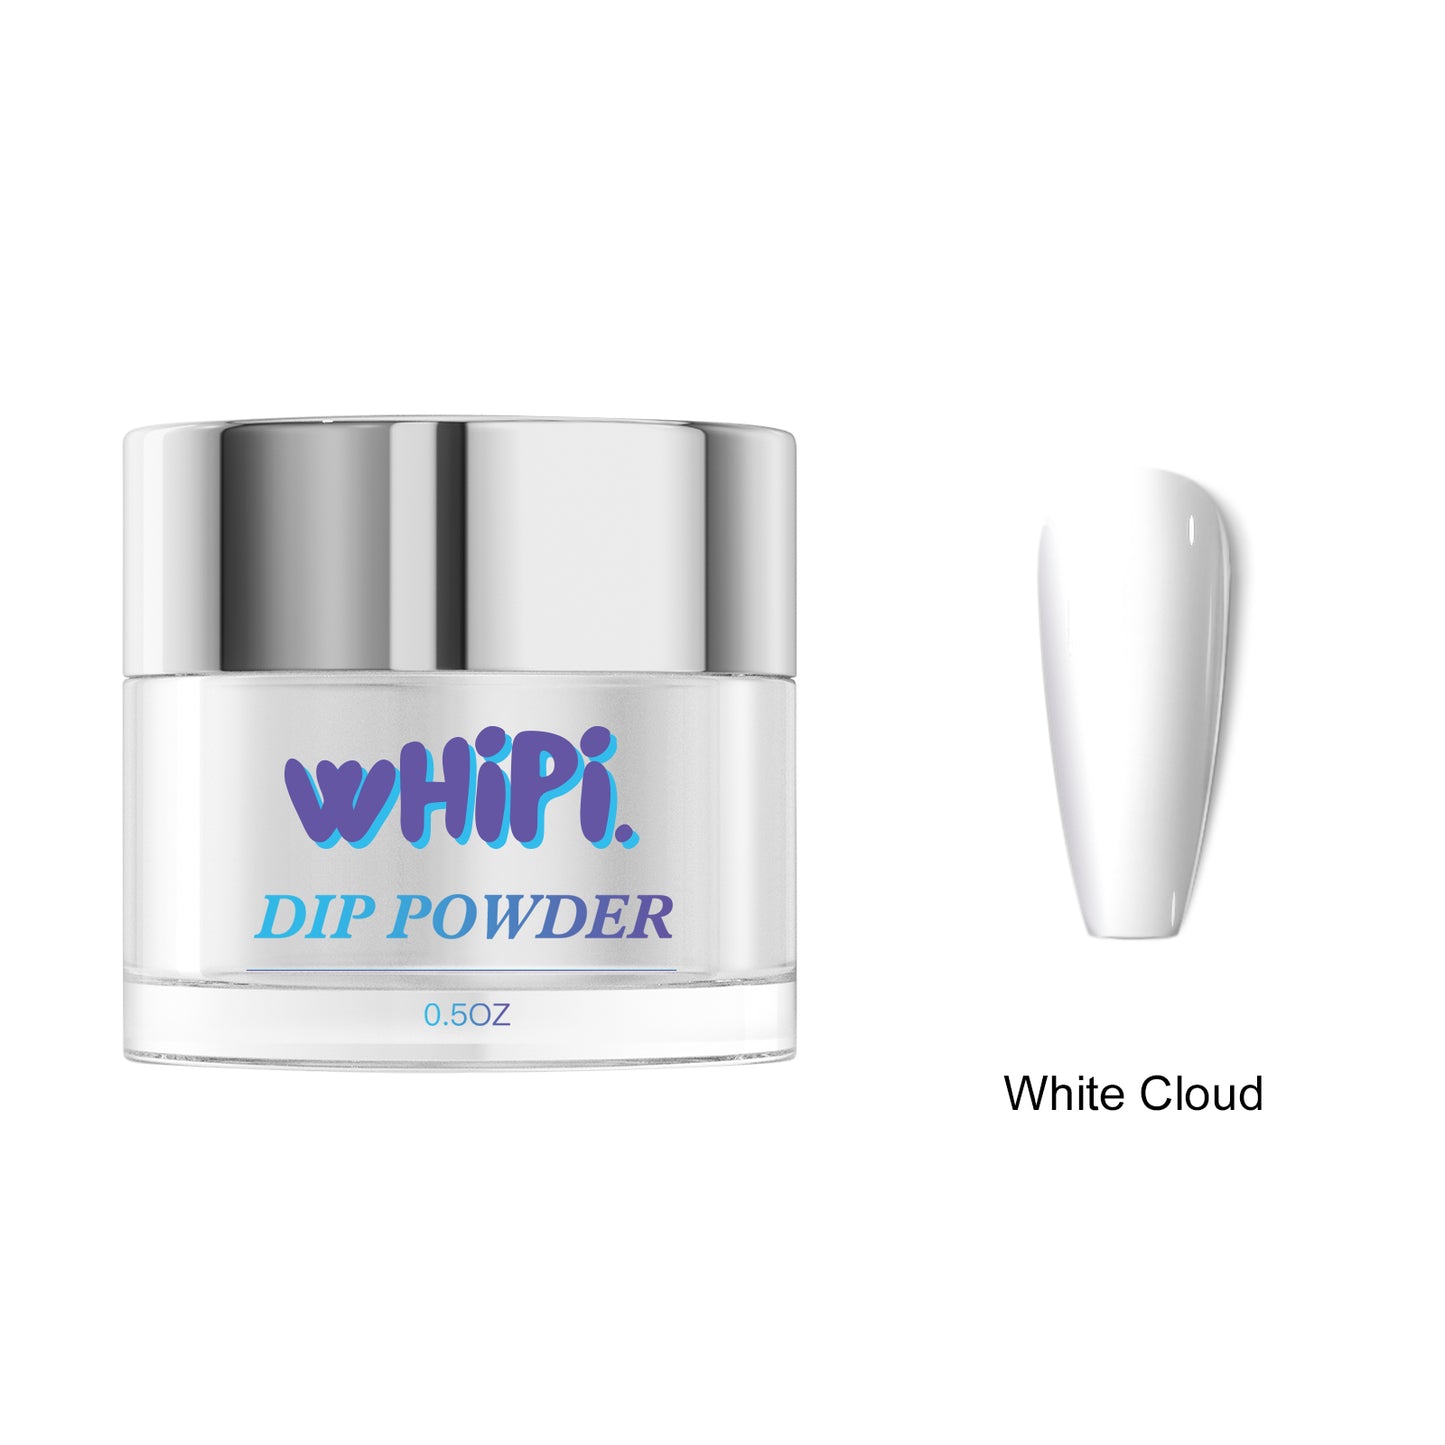 White Cloud Dip Powder